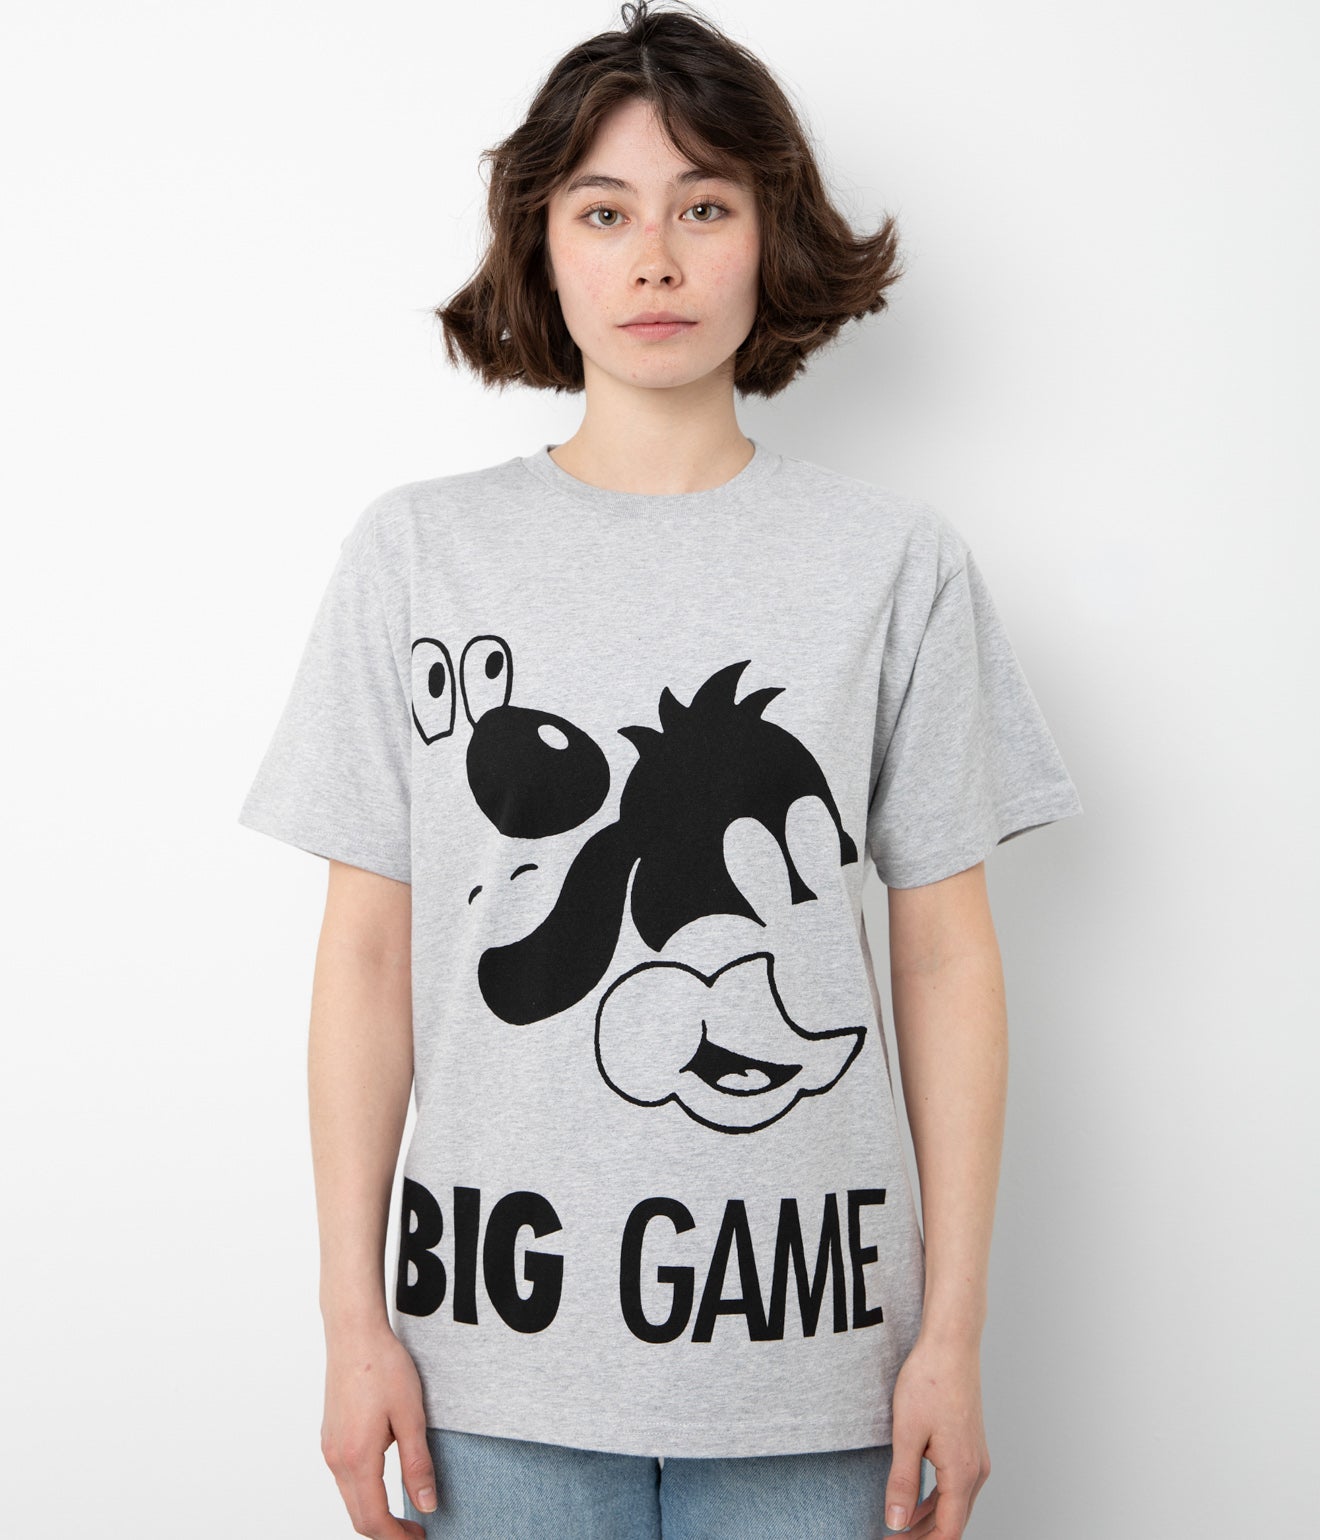 Public Possession "Big Game" T-Shirt - WEAREALLANIMALS